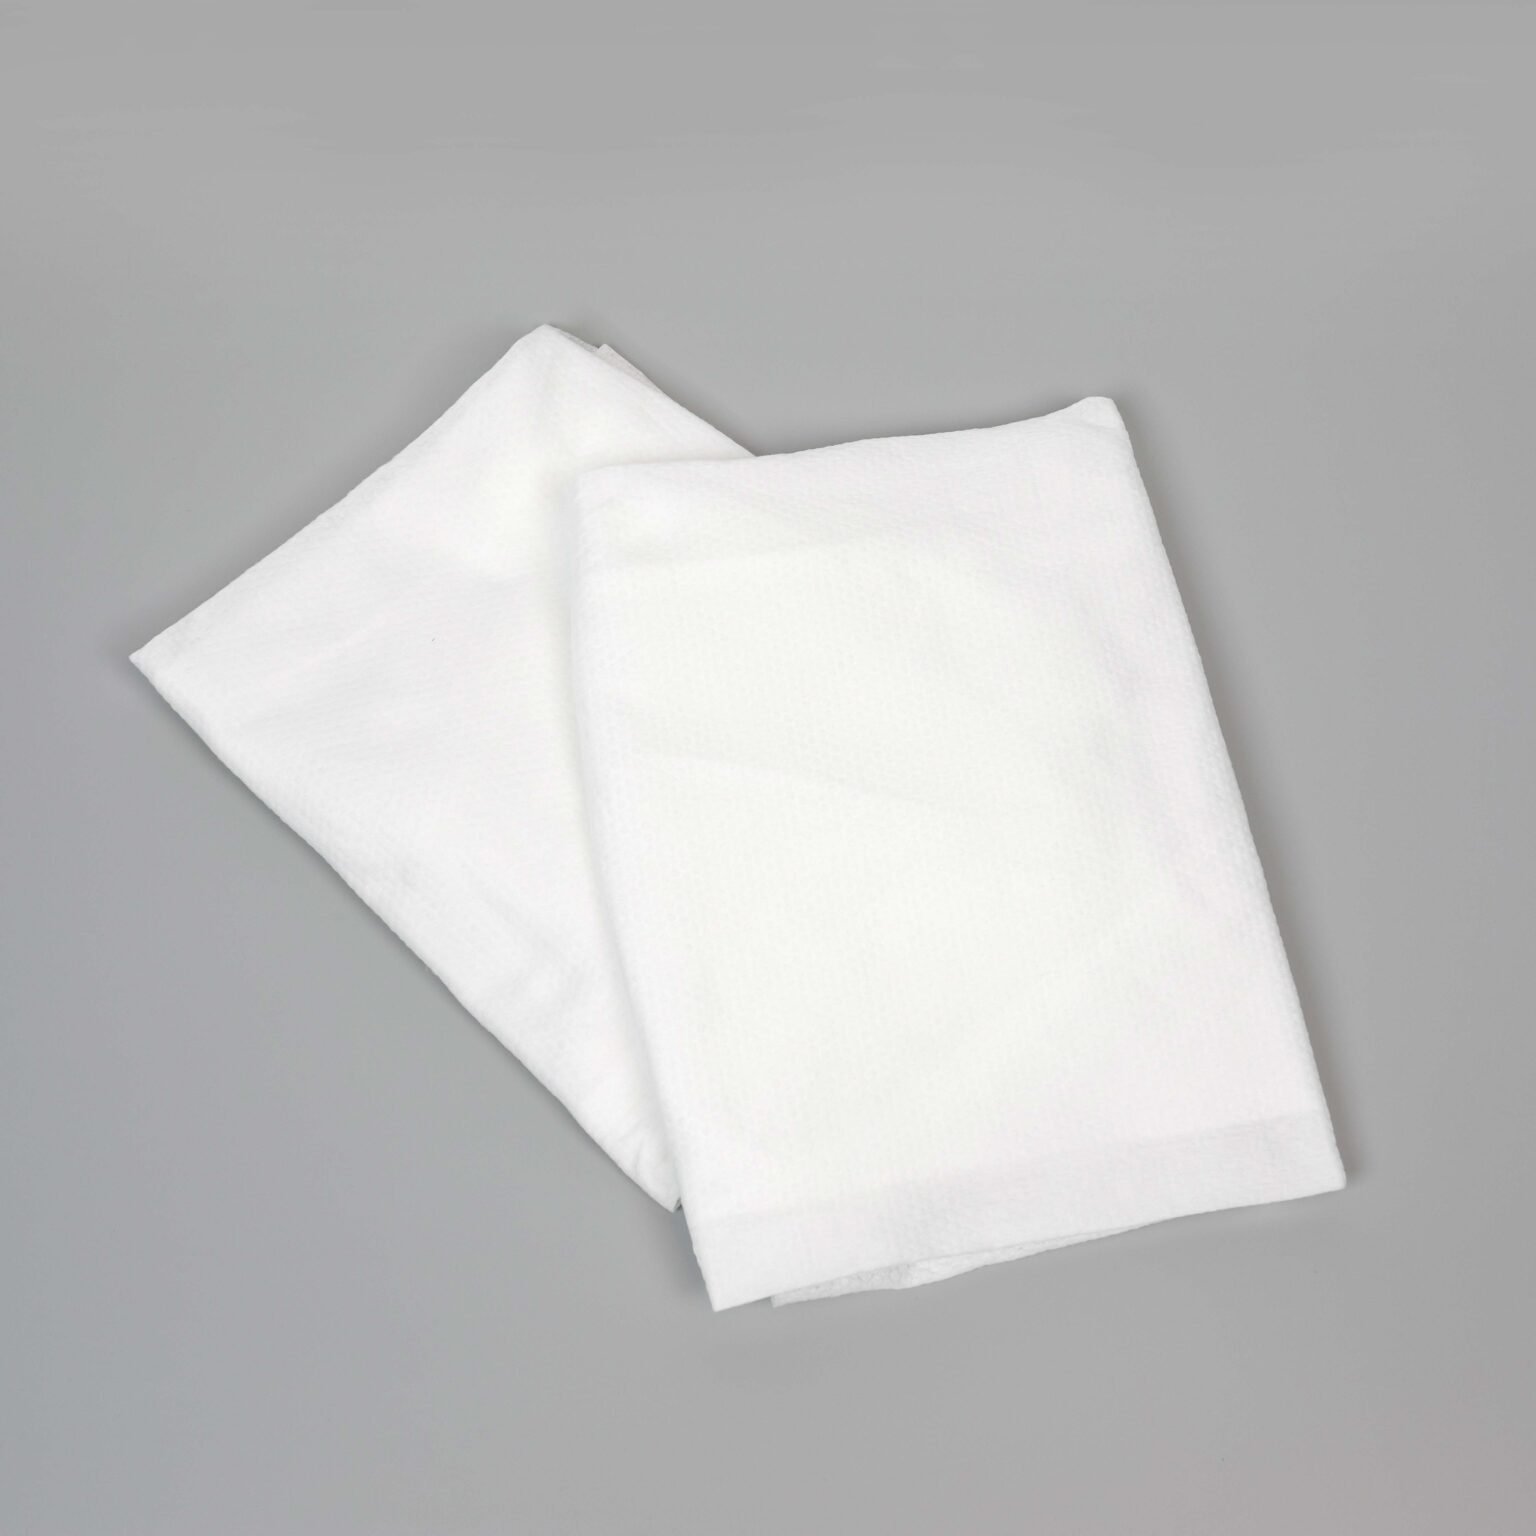 Shower Wraps - Disposable non woven absorbent shower wraps